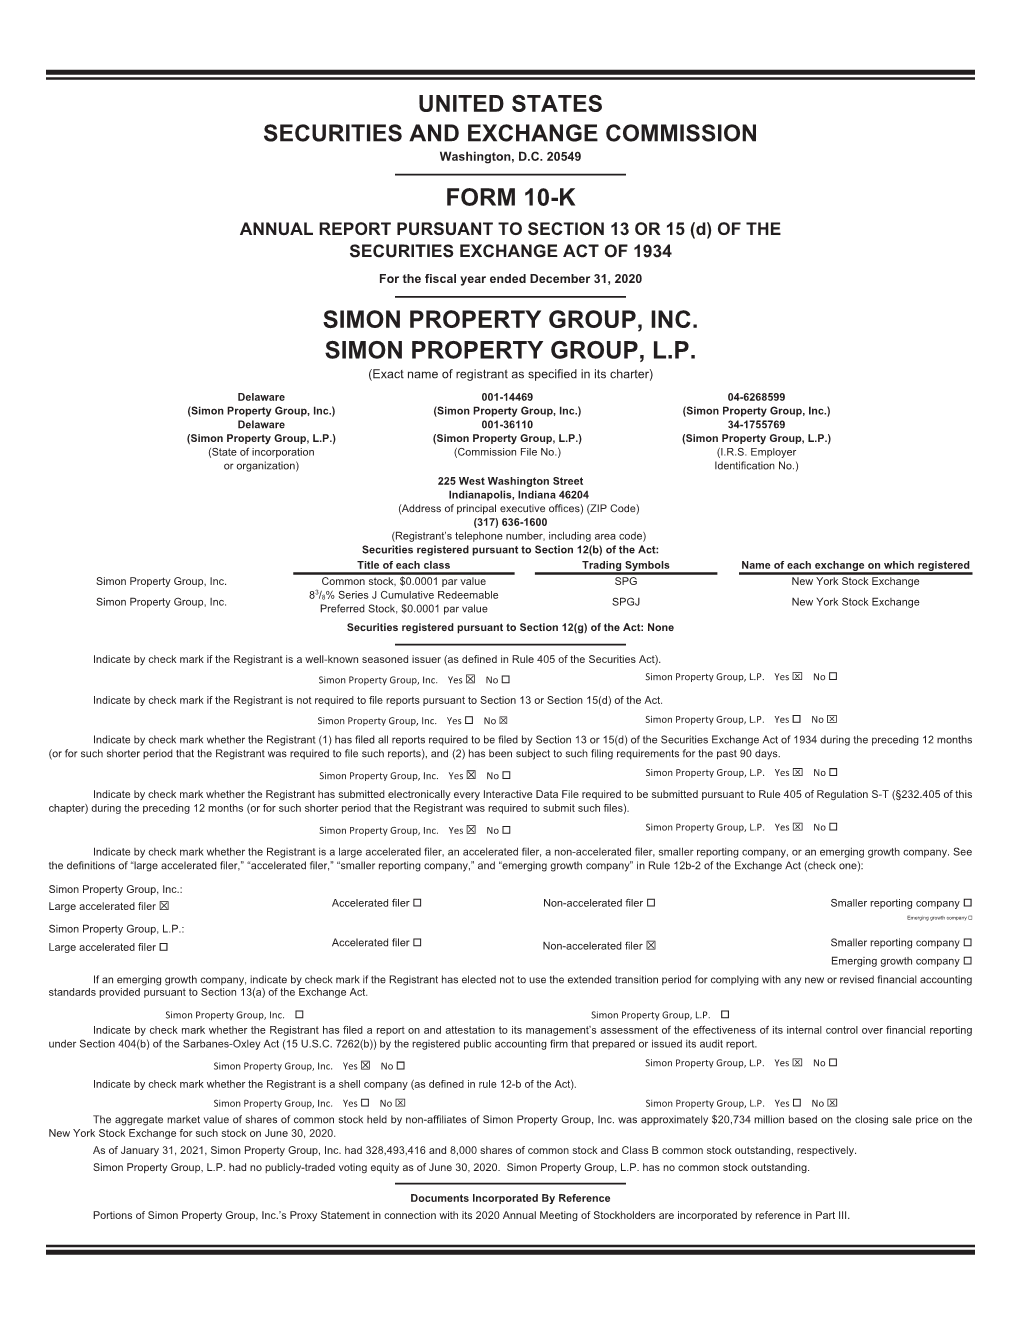 Form 10-K Simon Property Group, Inc. Simon Property